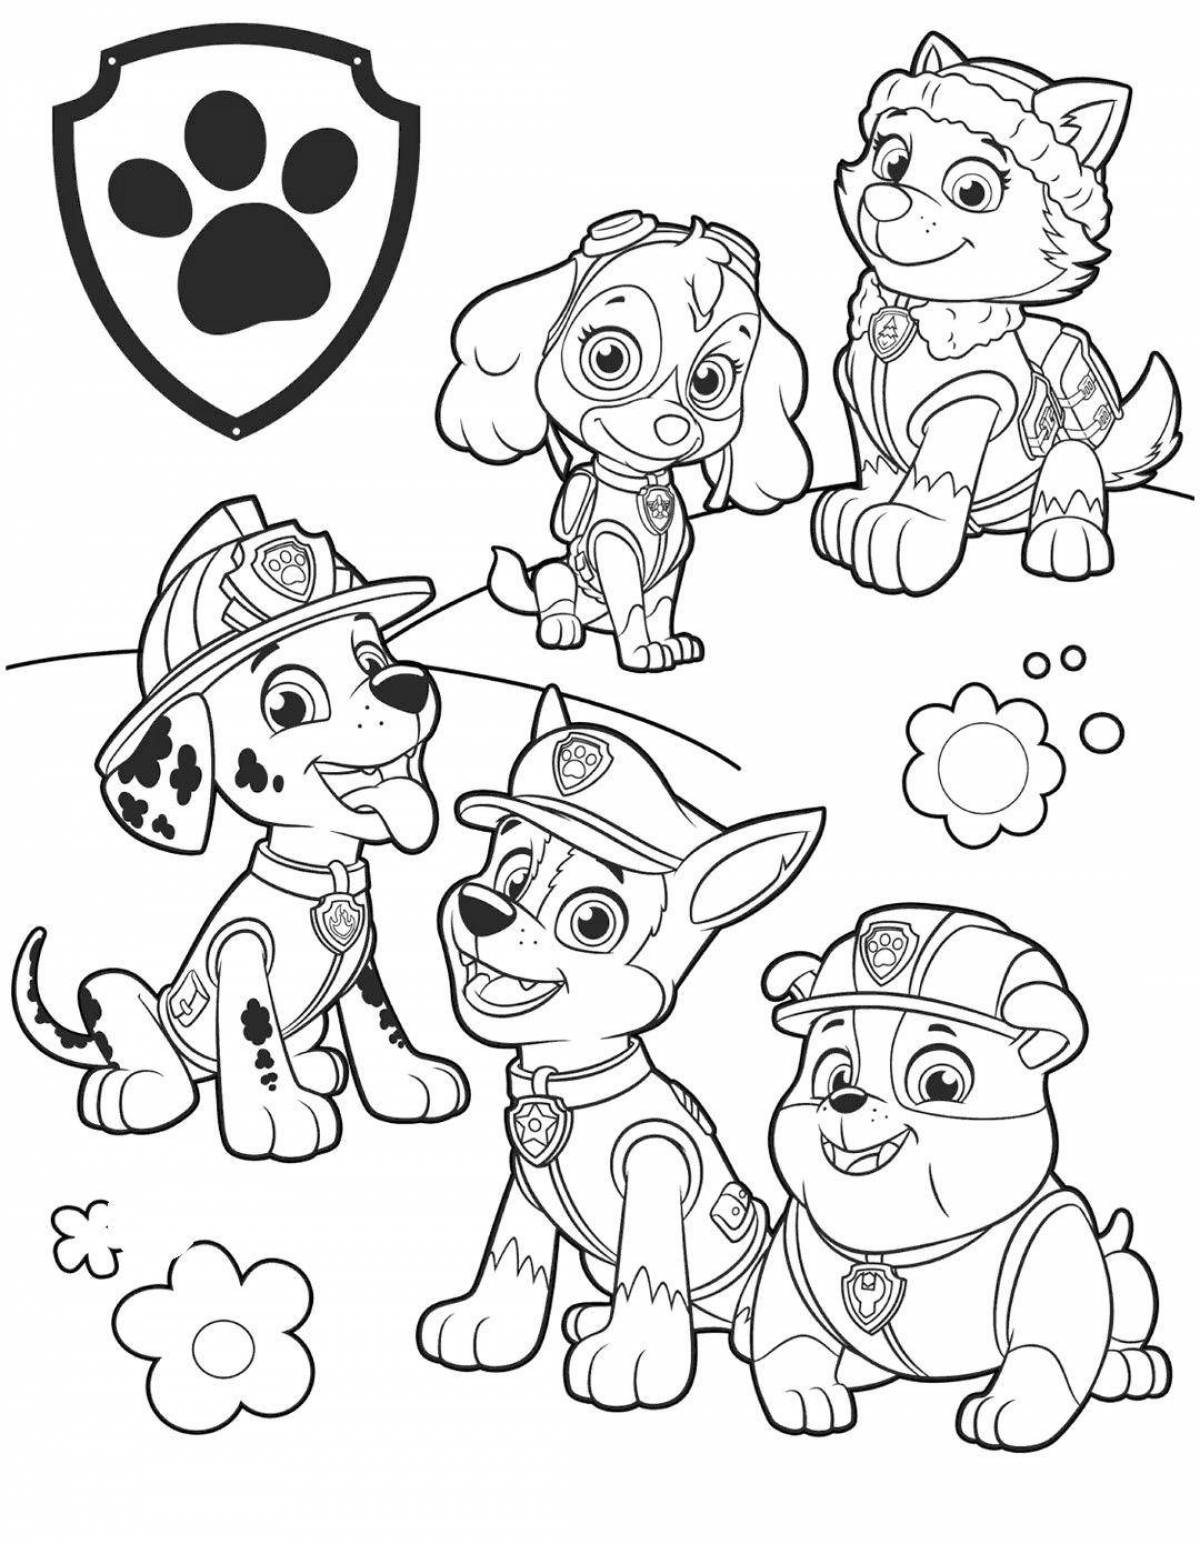 Adorable Paw Patrol coloring book